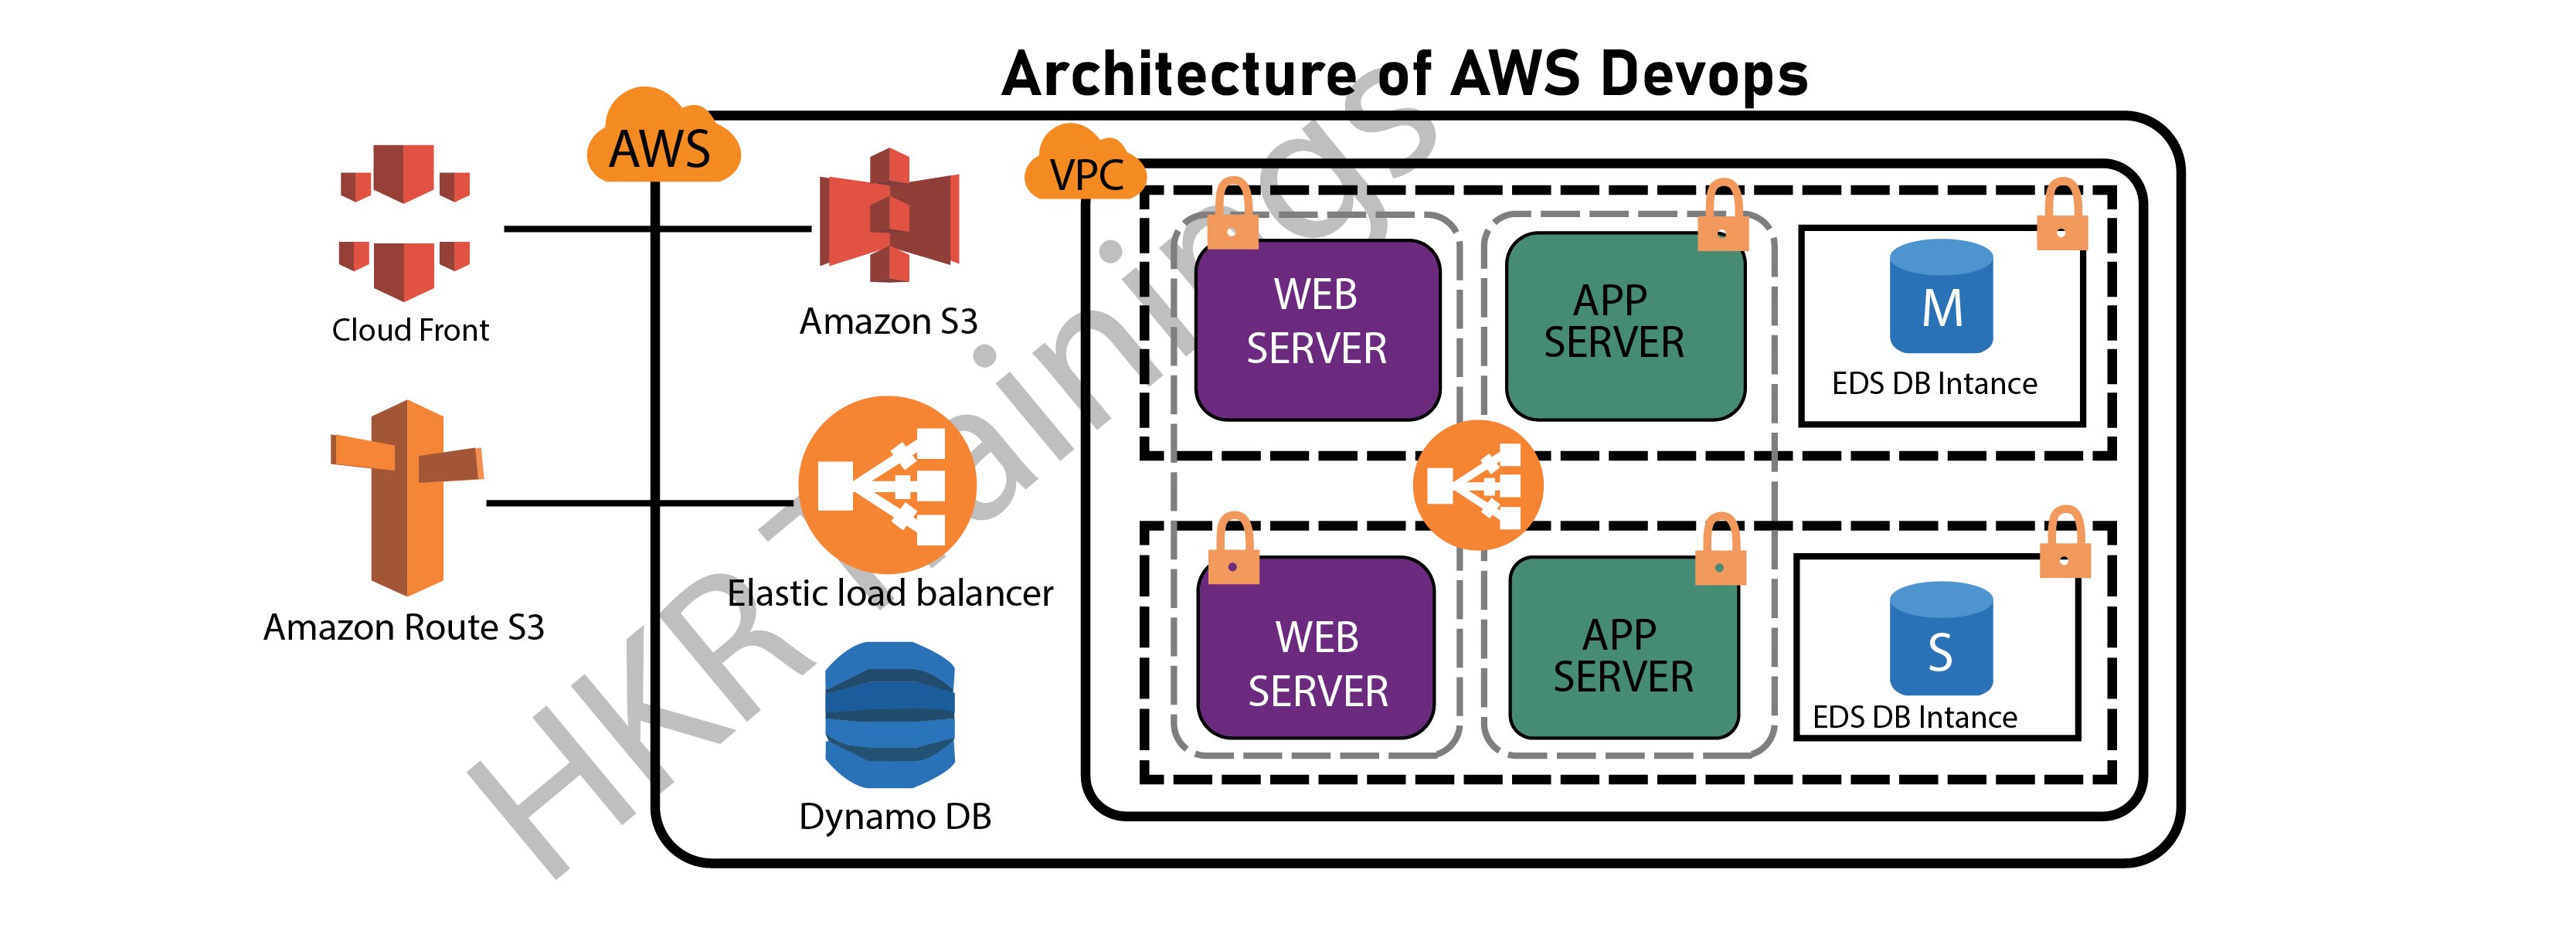 Architecture of AWS Devops